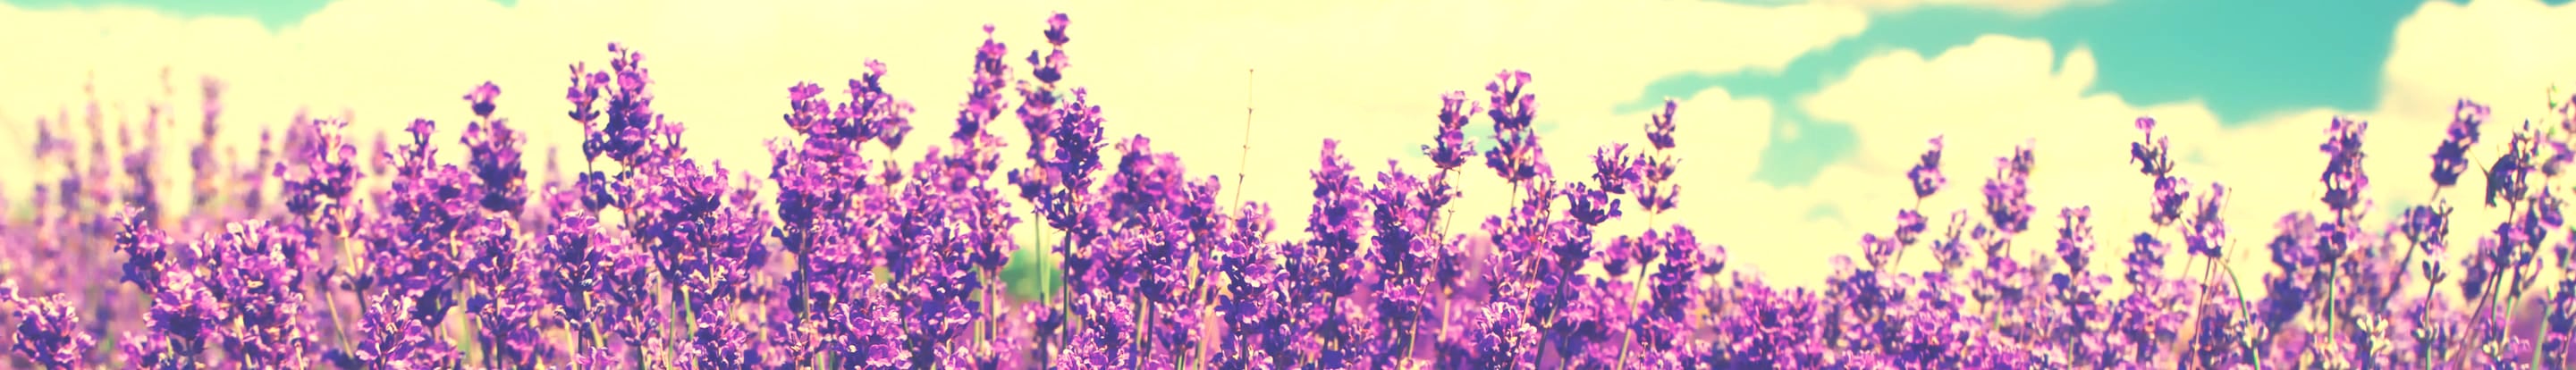 Lavender growing in field